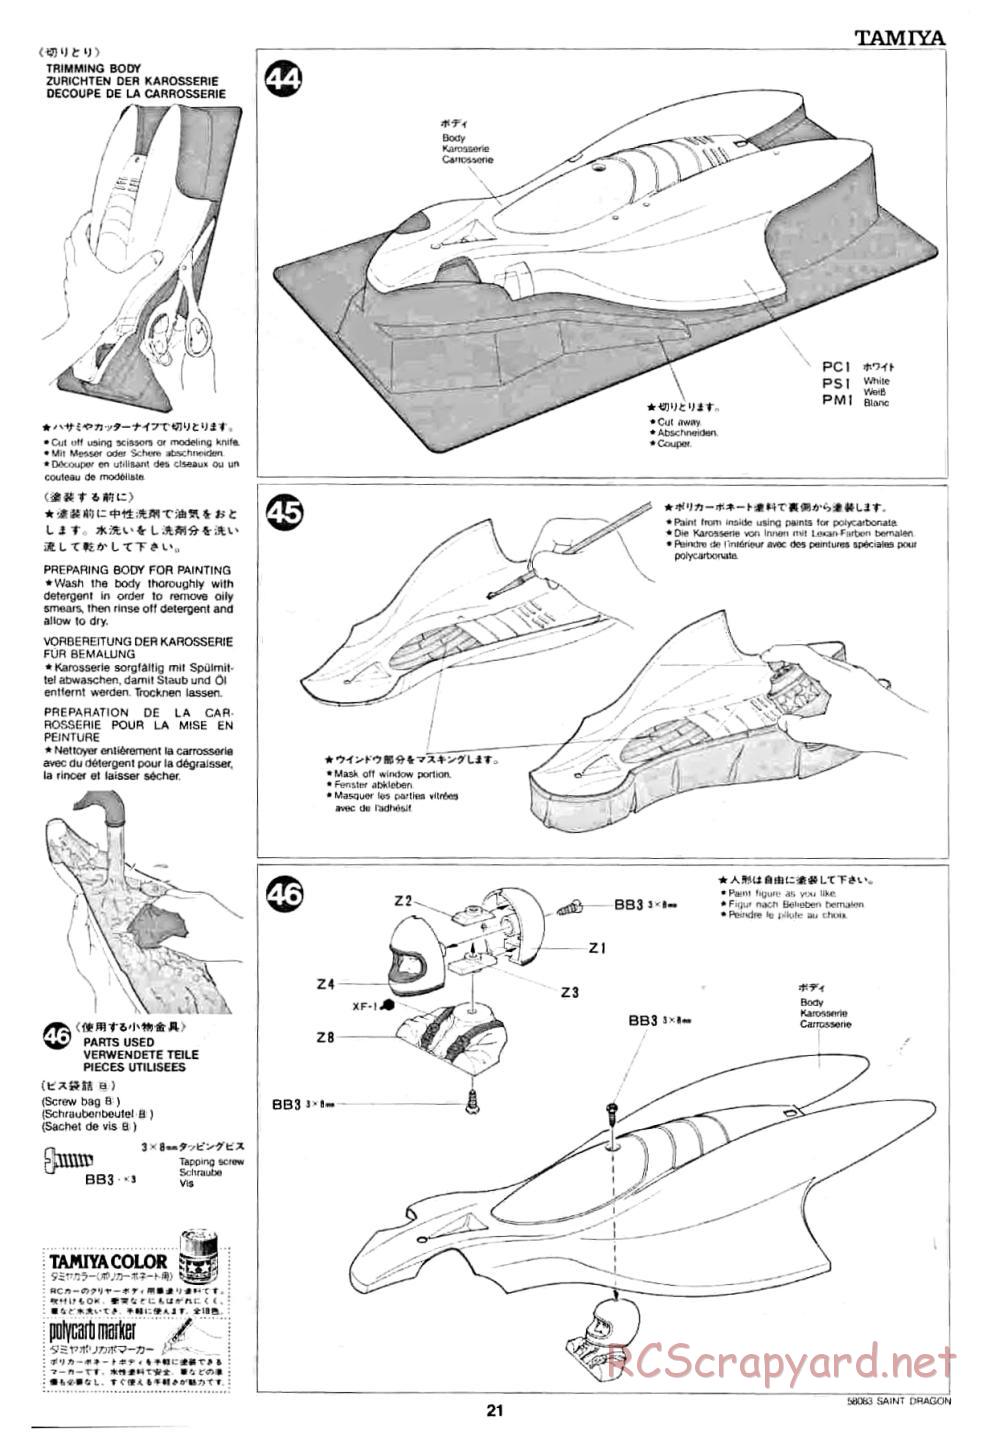 Tamiya - Saint Dragon - 58083 - Manual - Page 21